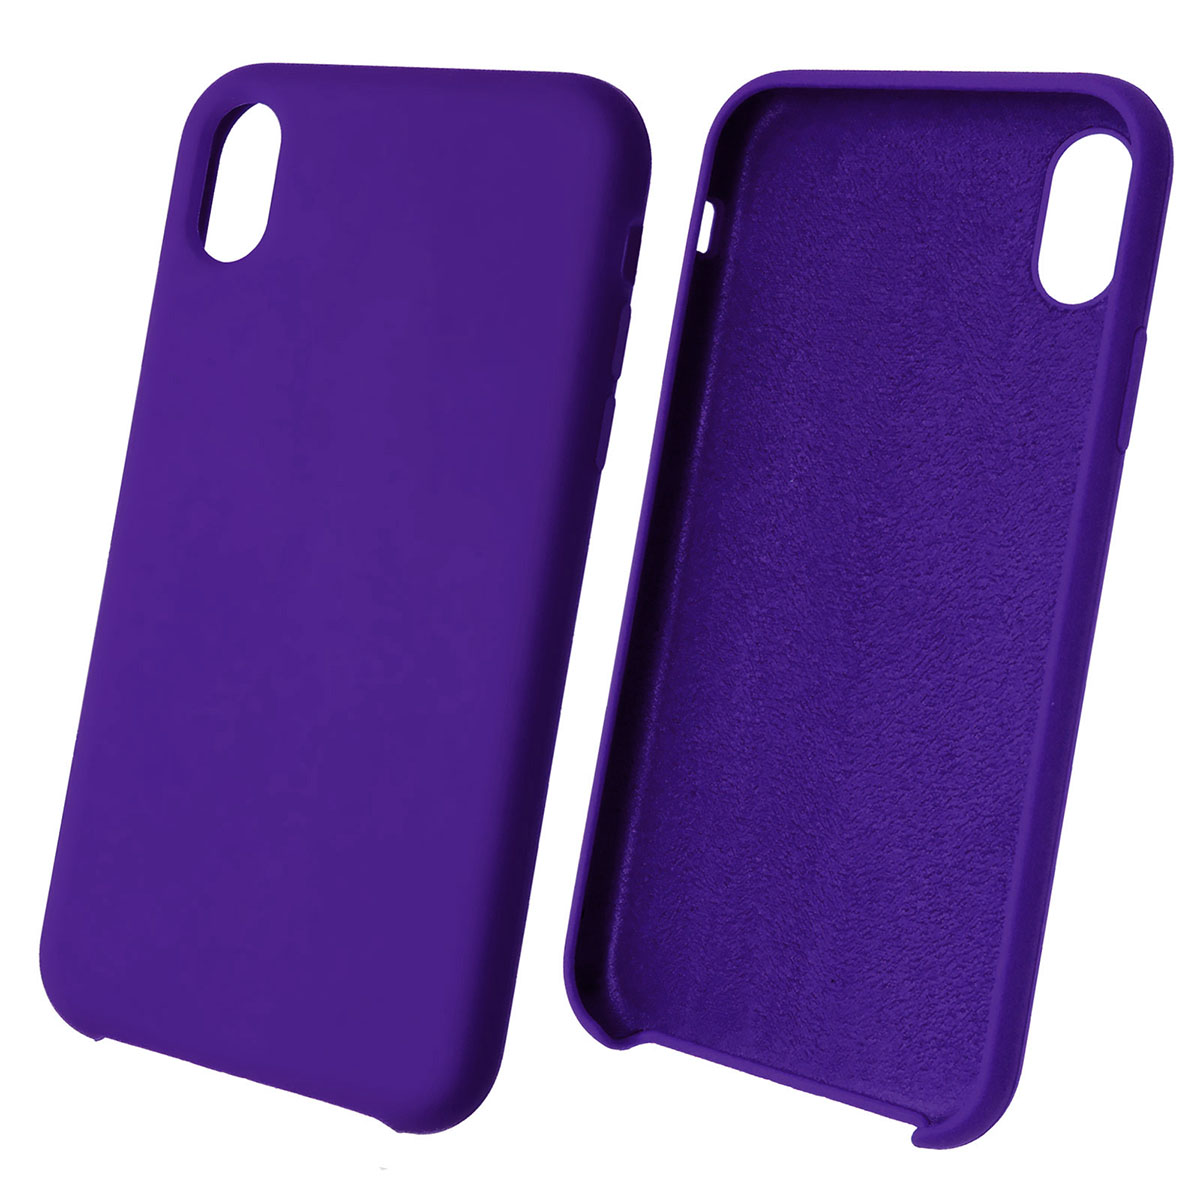 Чехол накладка Silicon Case для APPLE iPhone XR, силикон, бархат, цвет индиго.